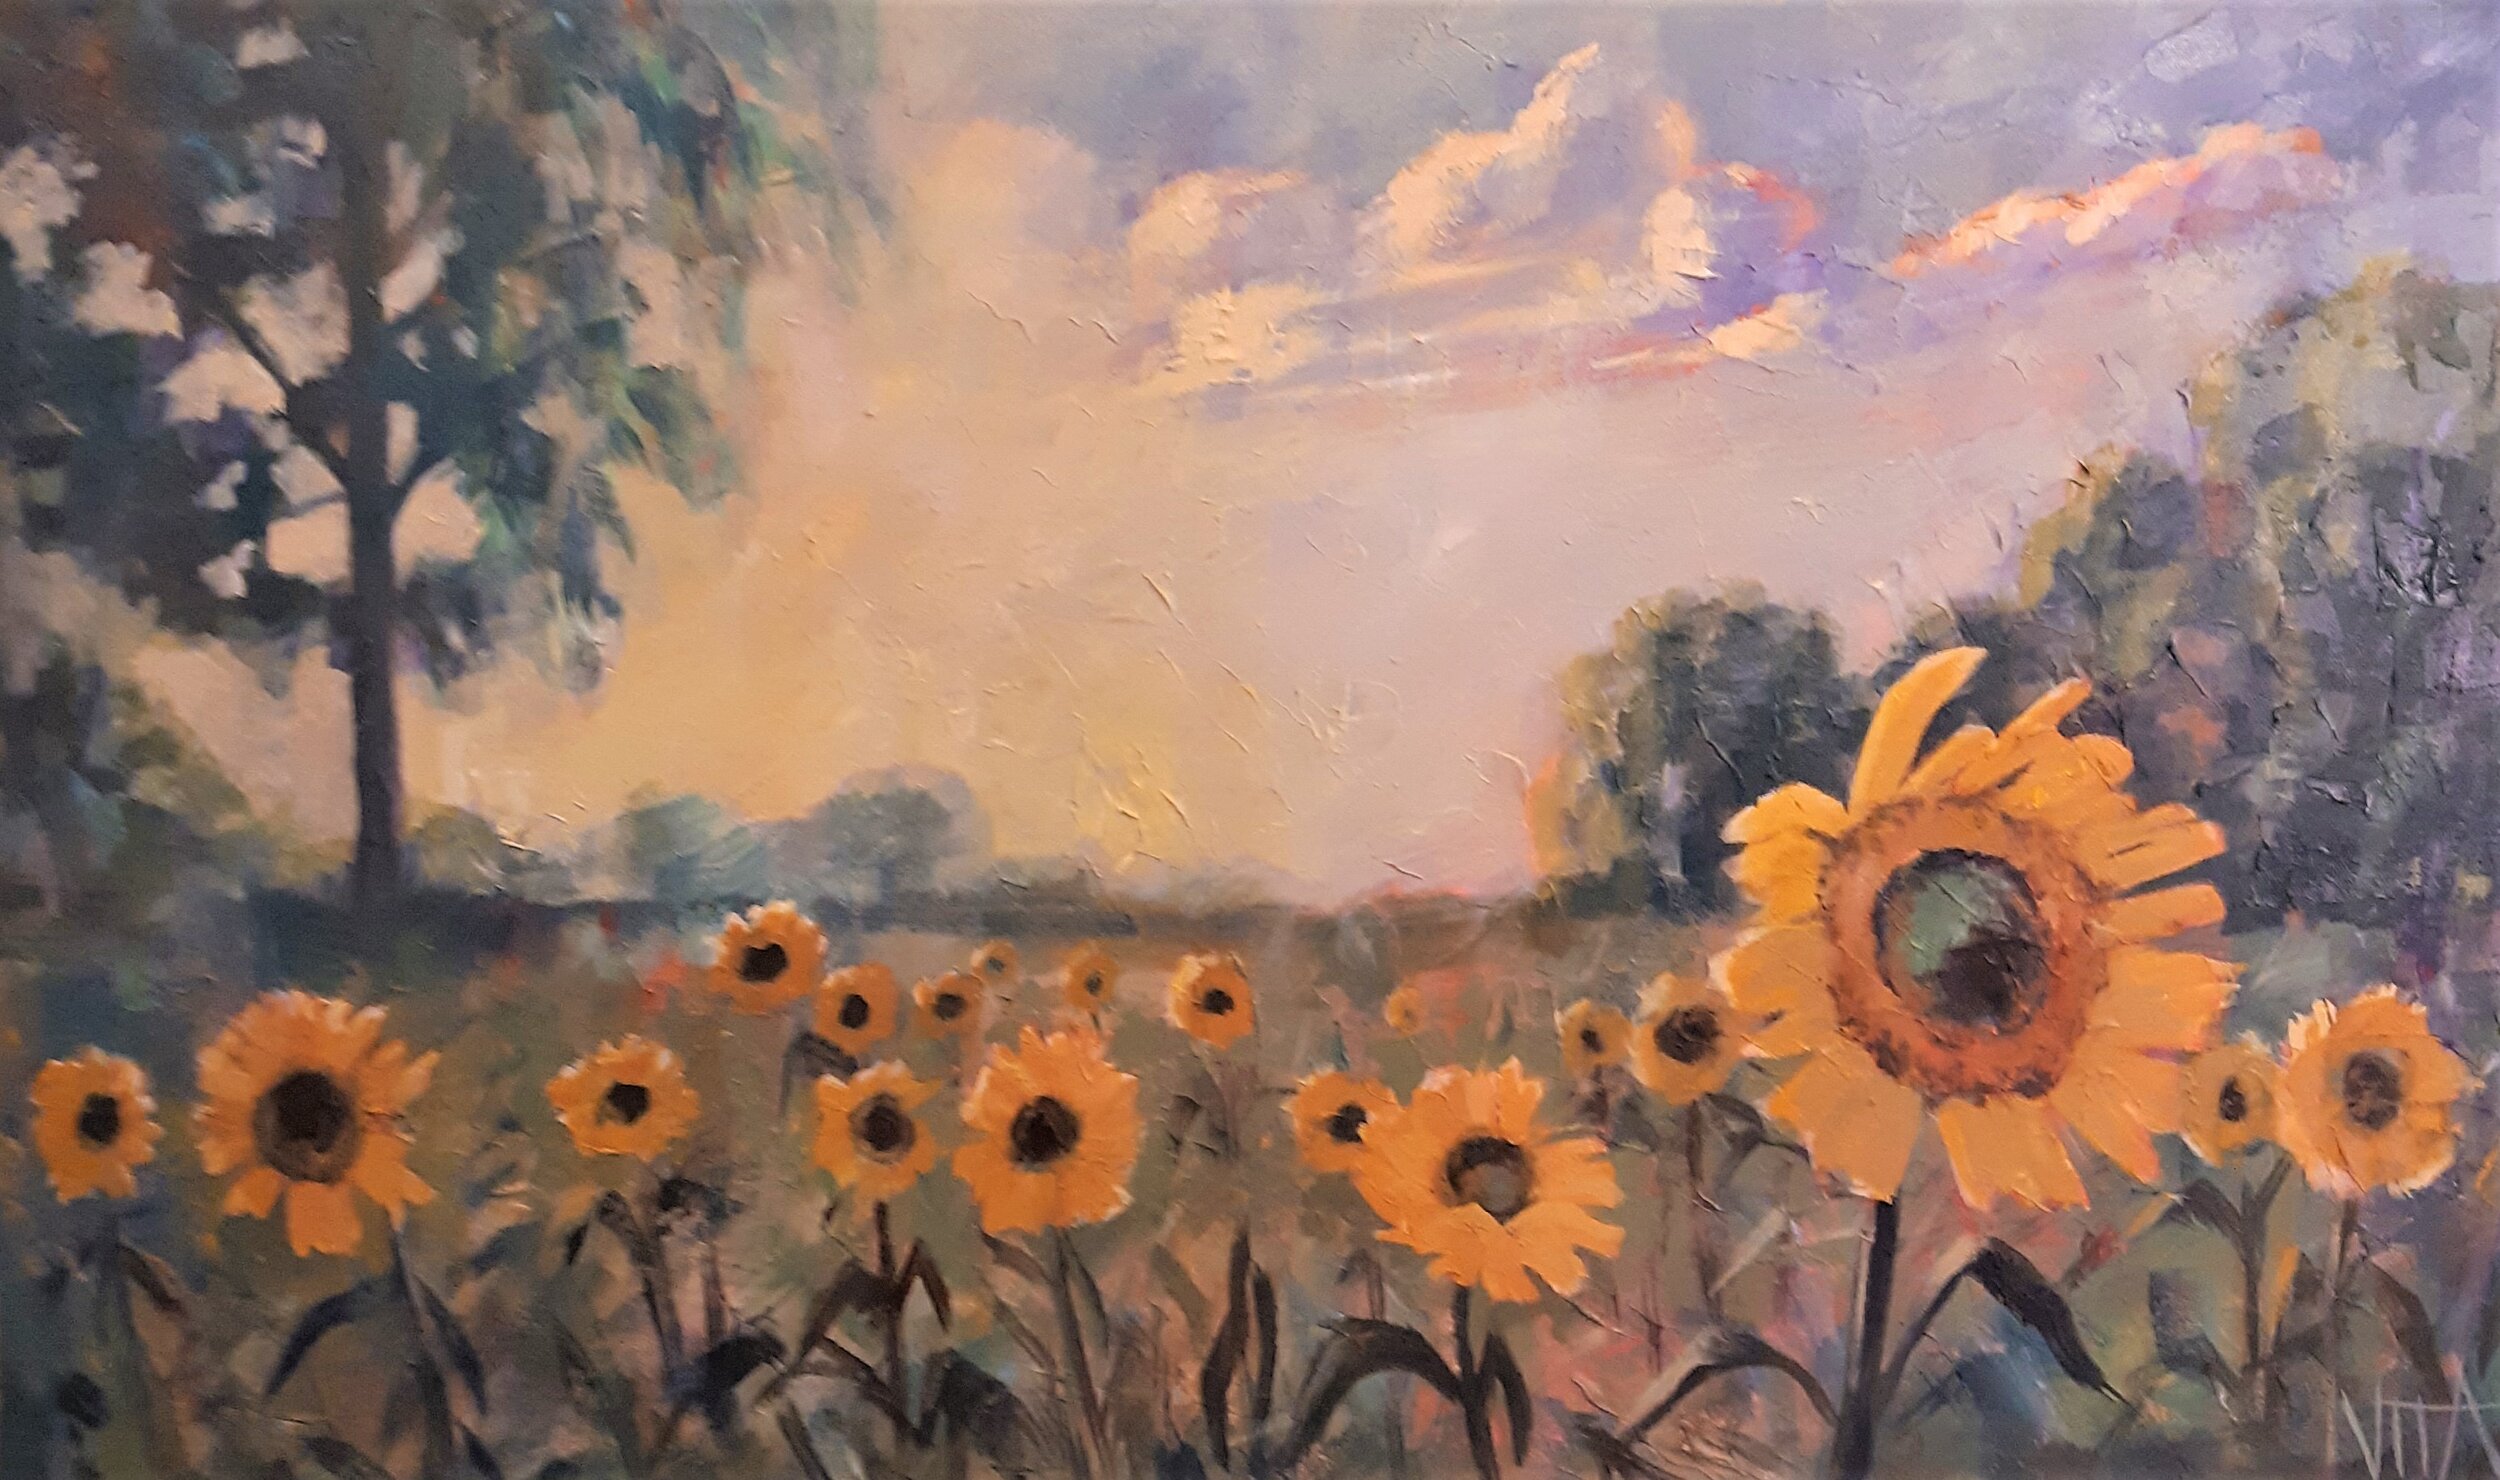 SOLD, Sunflower Field Painting, Acrylic on Canvas, Copyright 2021 Hirschten